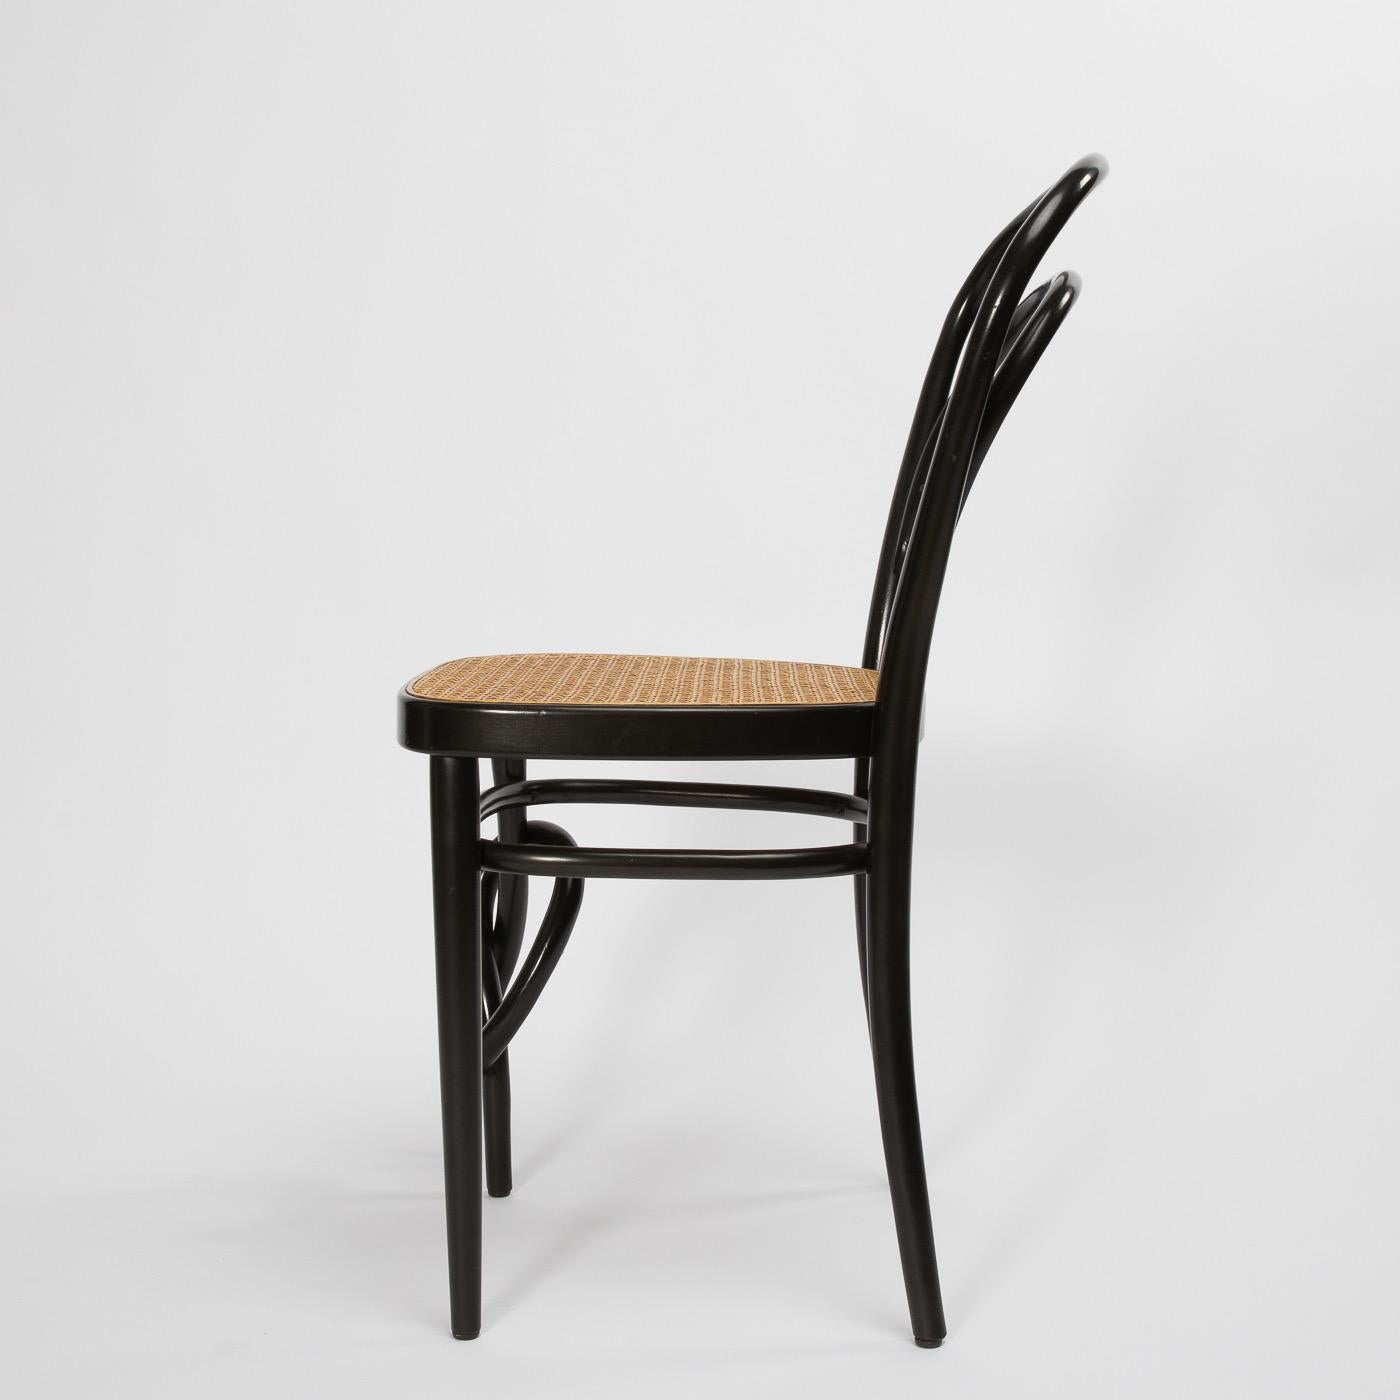 214 Knotted Chair, Thonet Studio, Thonet, Austria 1